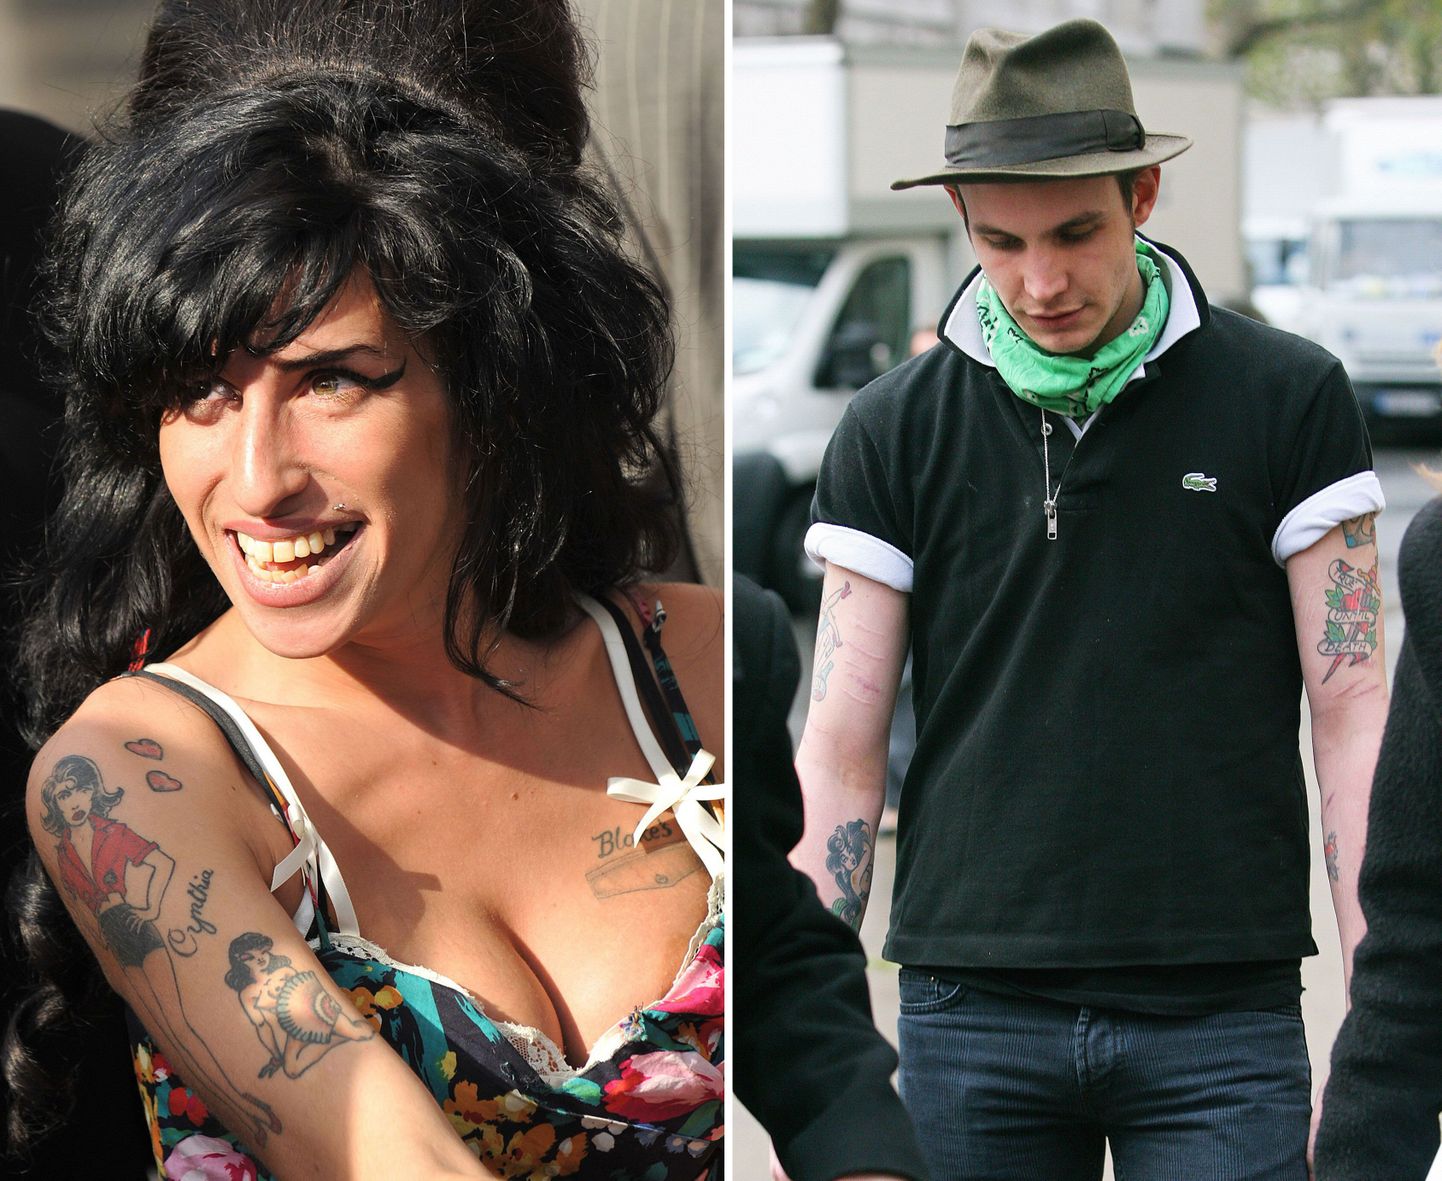 Amy Winehouse ja Blake Fielder-Civil